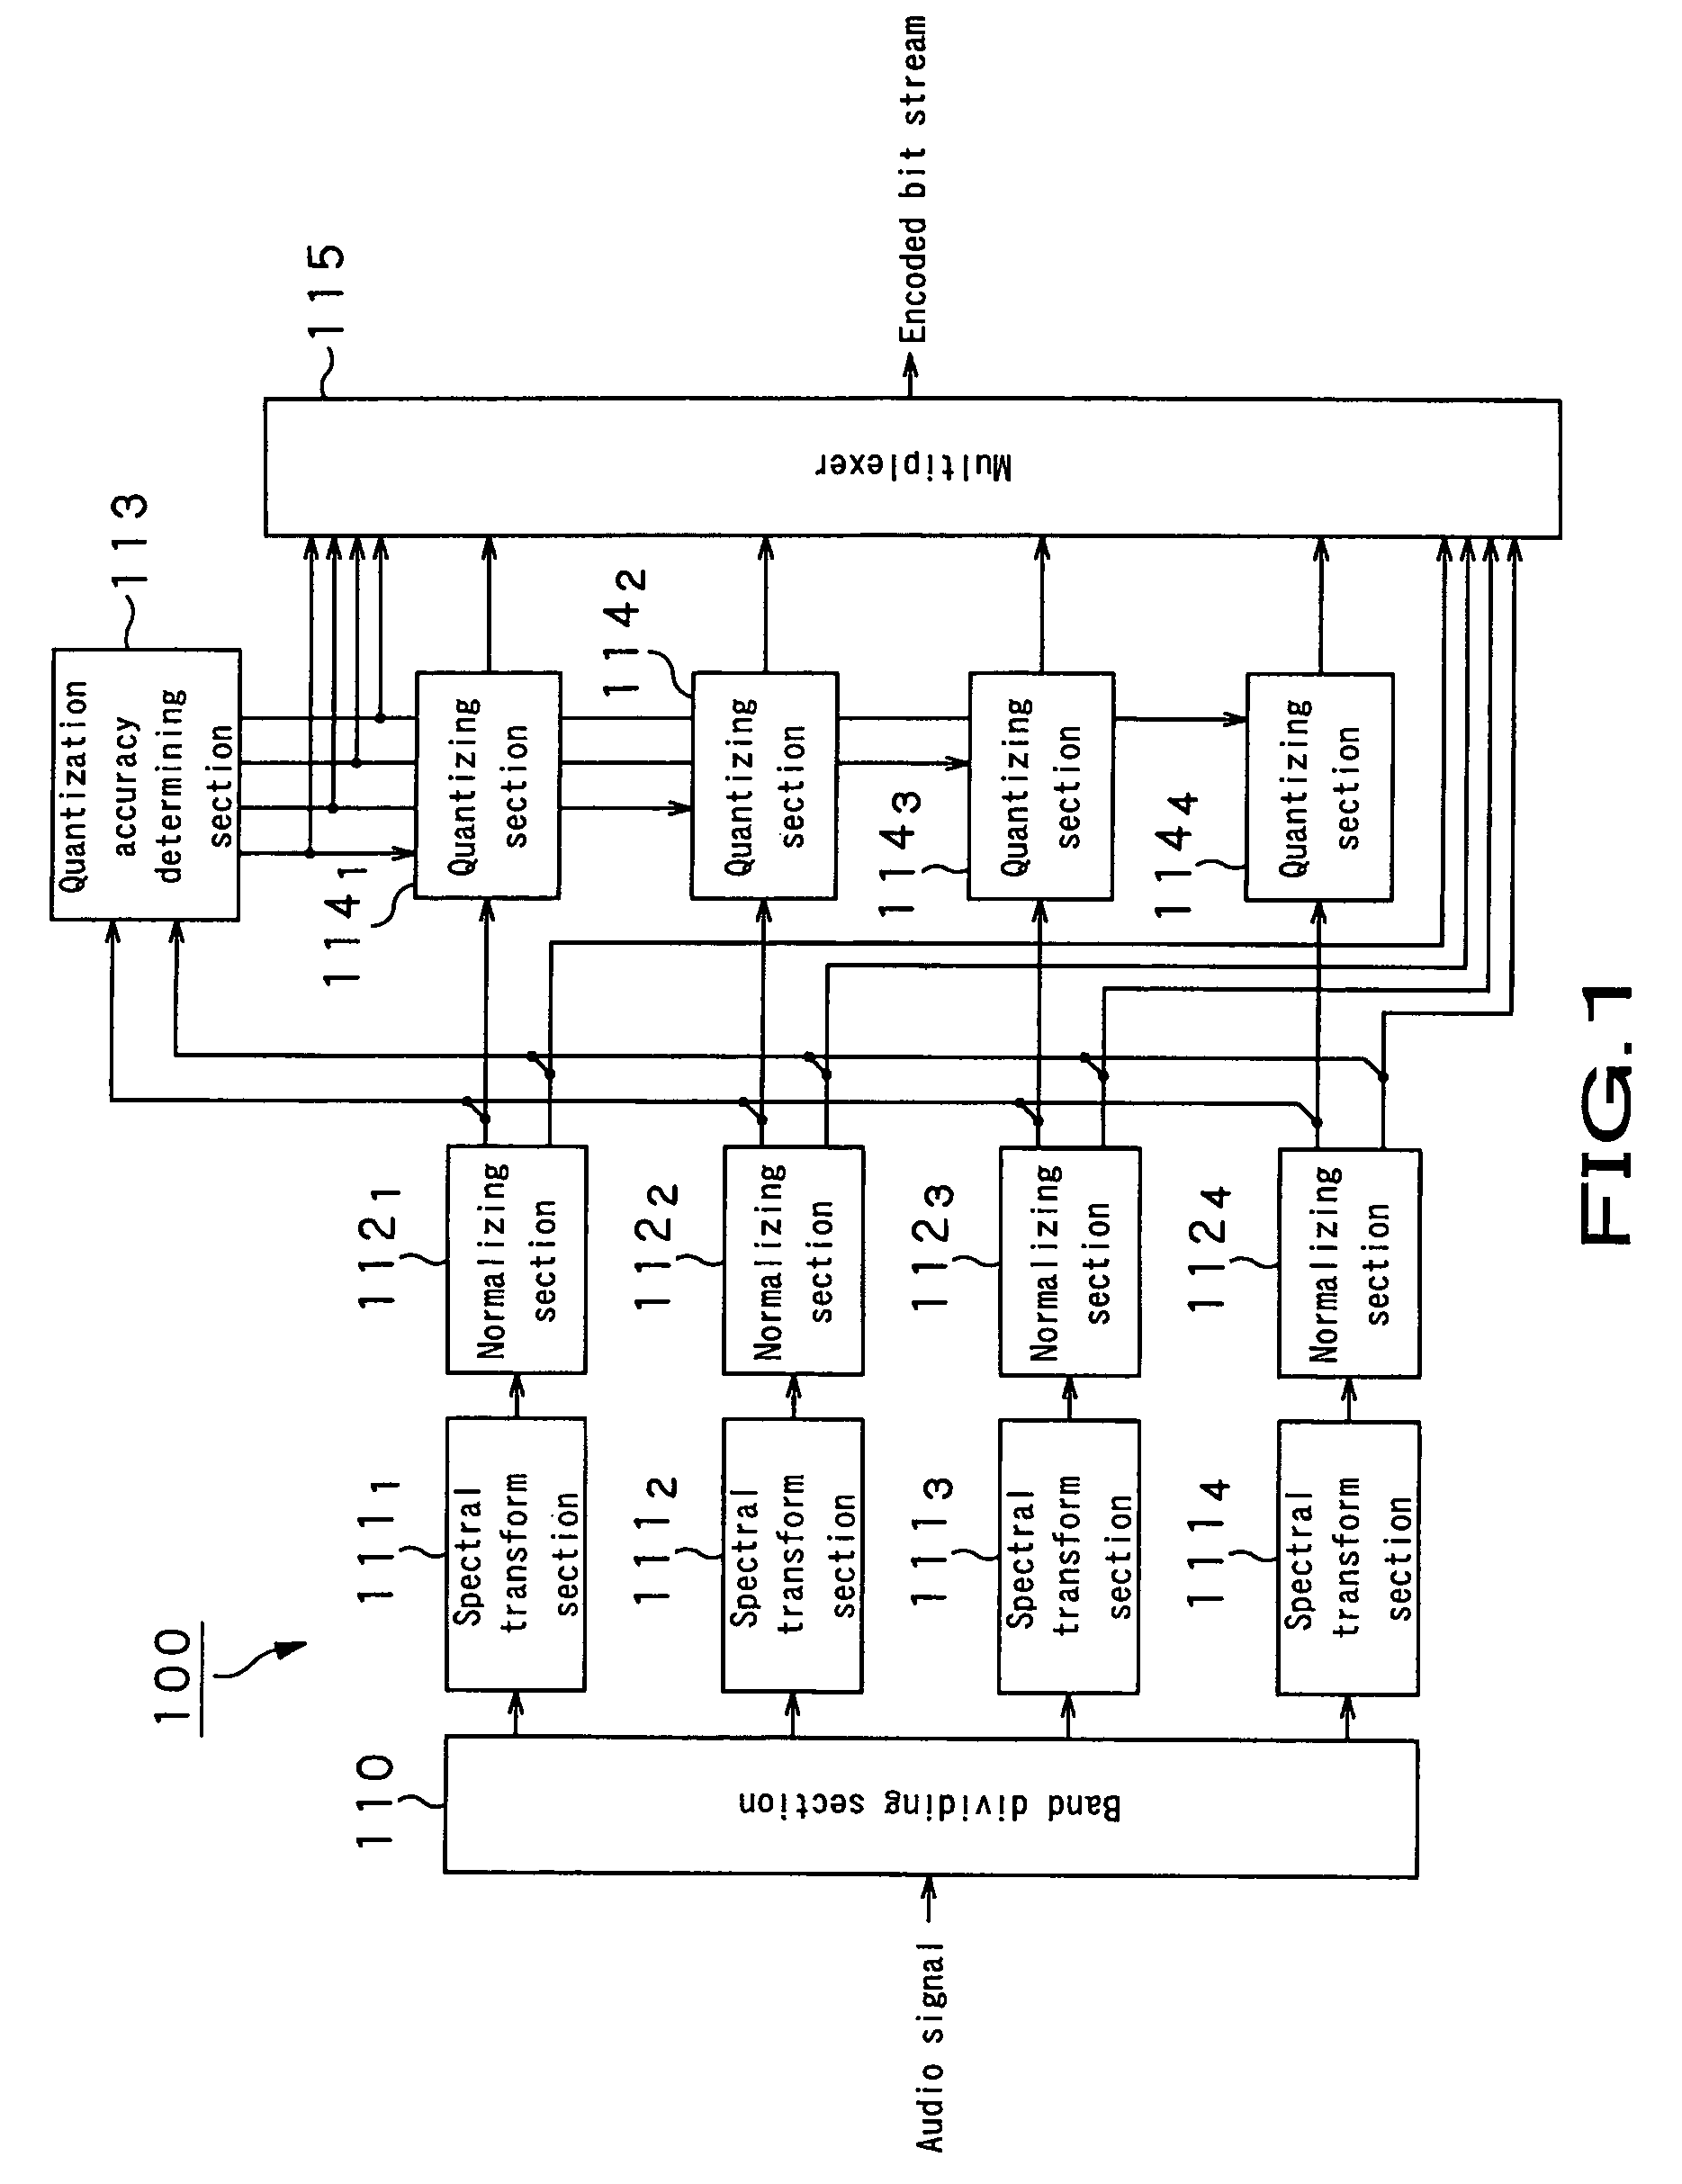 Audio signal encoding apparatus and audio signal encoding method